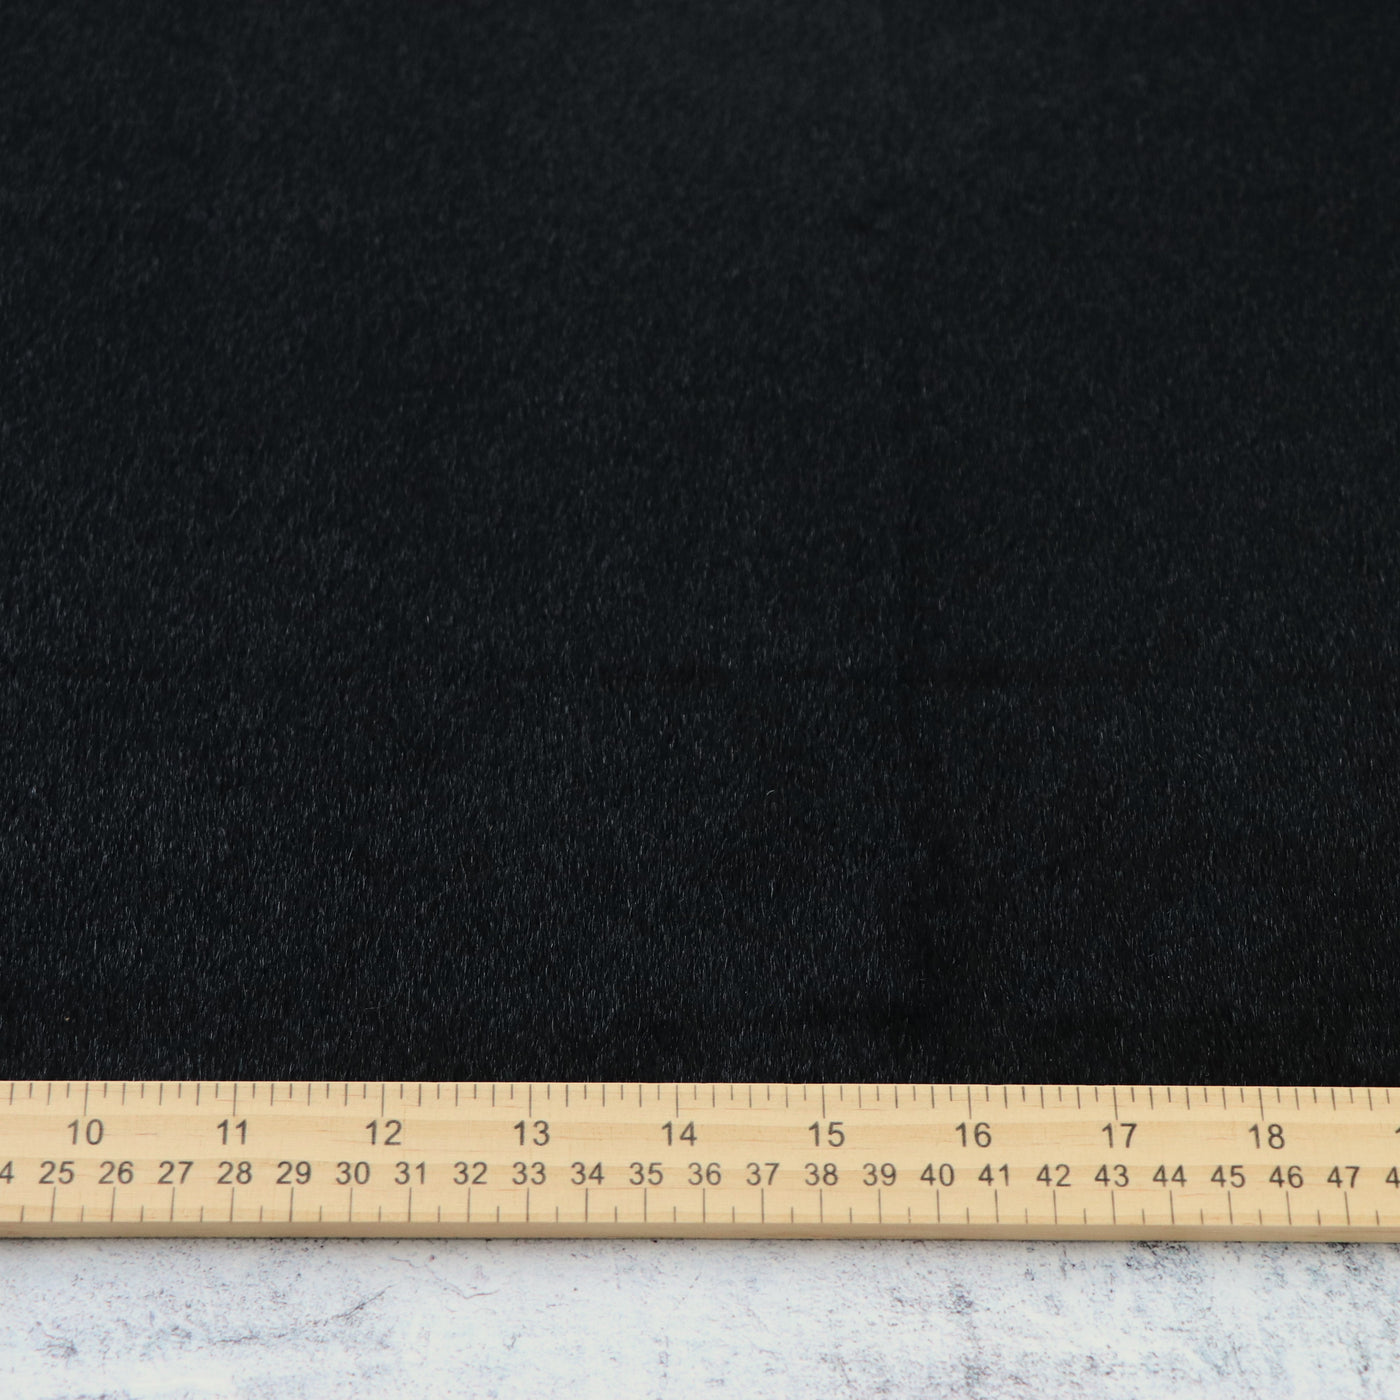 Corte empaquetado de 1/2 yarda: Piel sintética negra tonal con teñido anudado